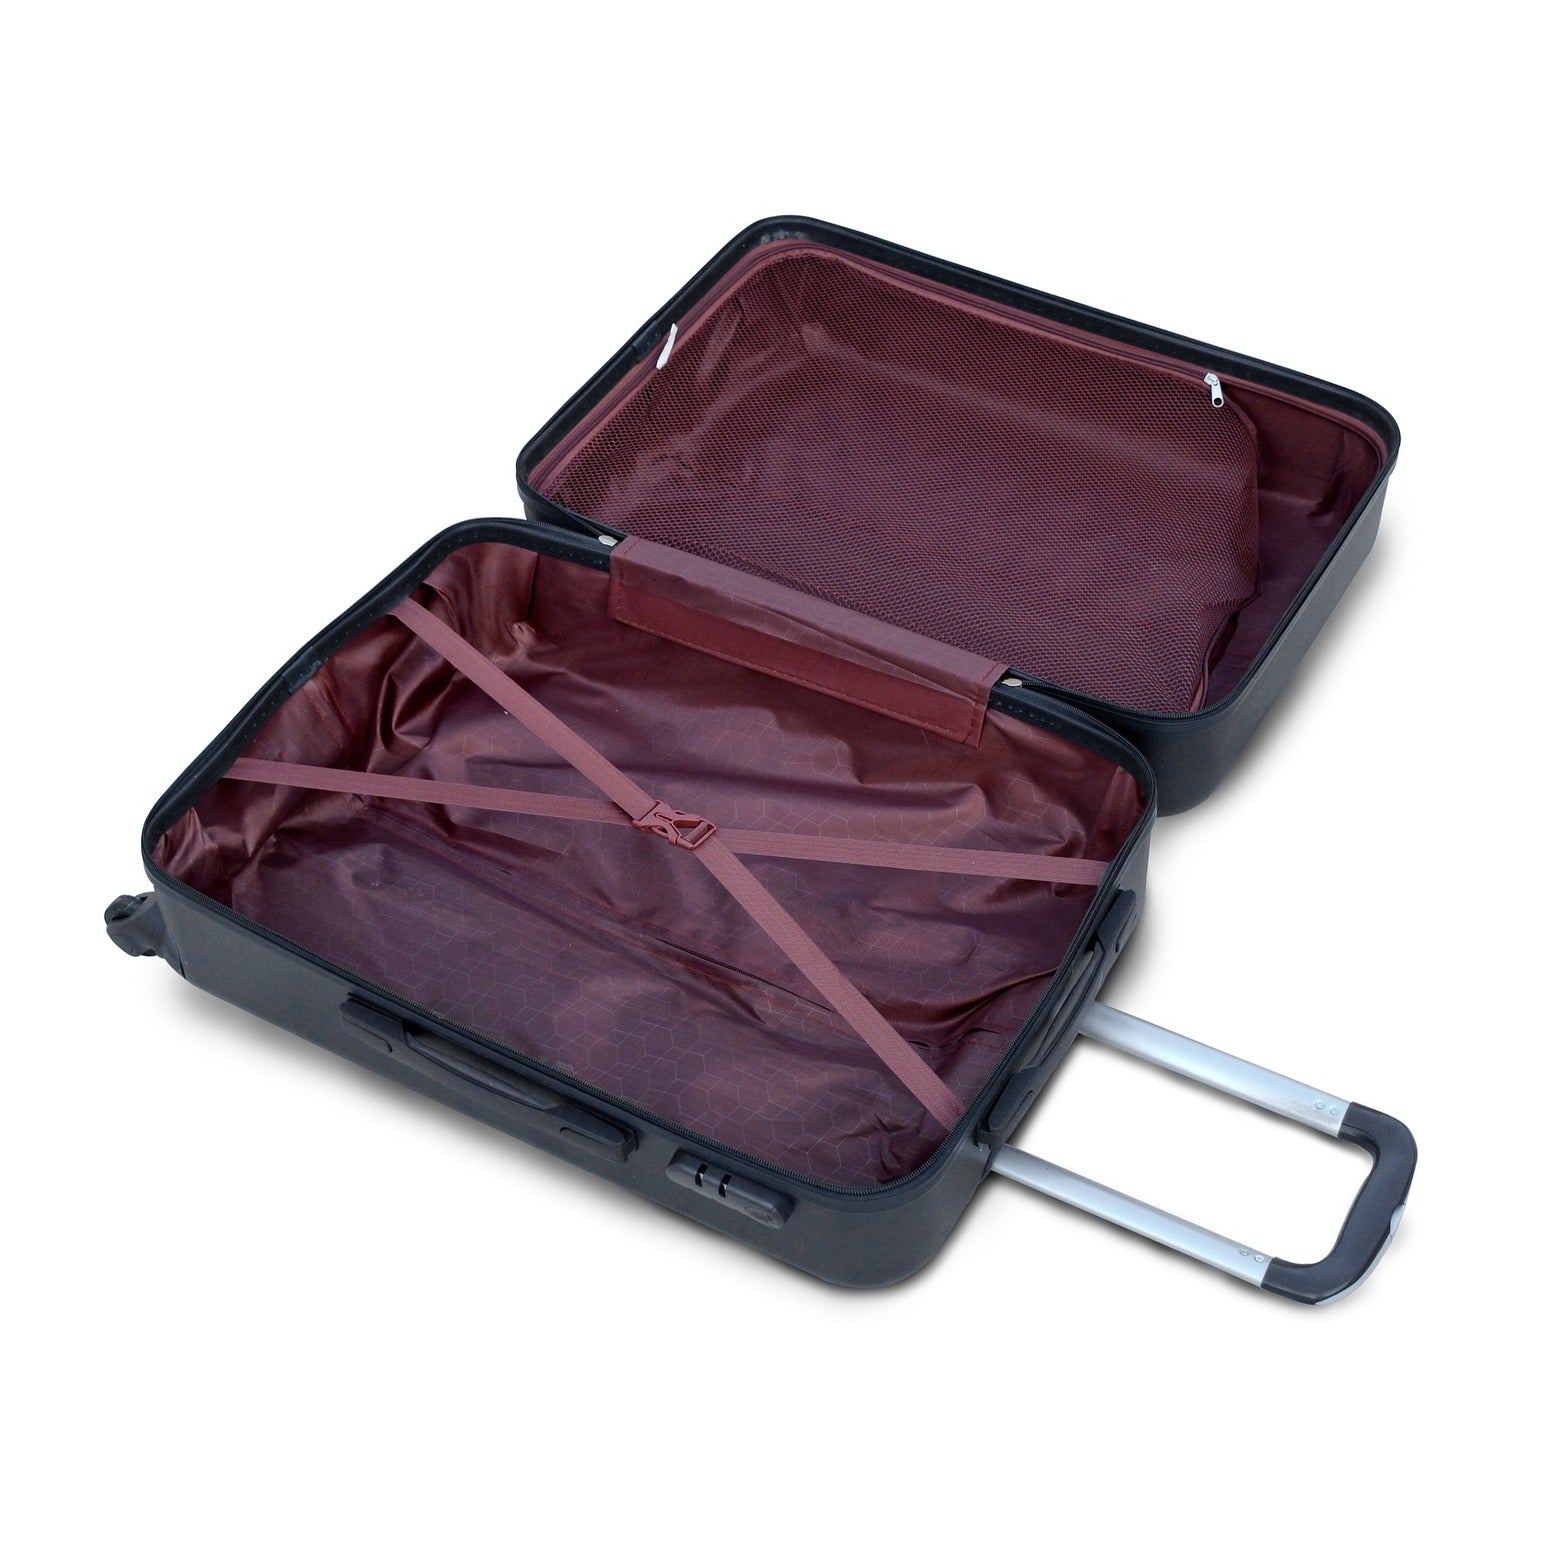 24" Black Colour Diamond Cut ABS Luggage Lightweight Hard Case Trolley Bag